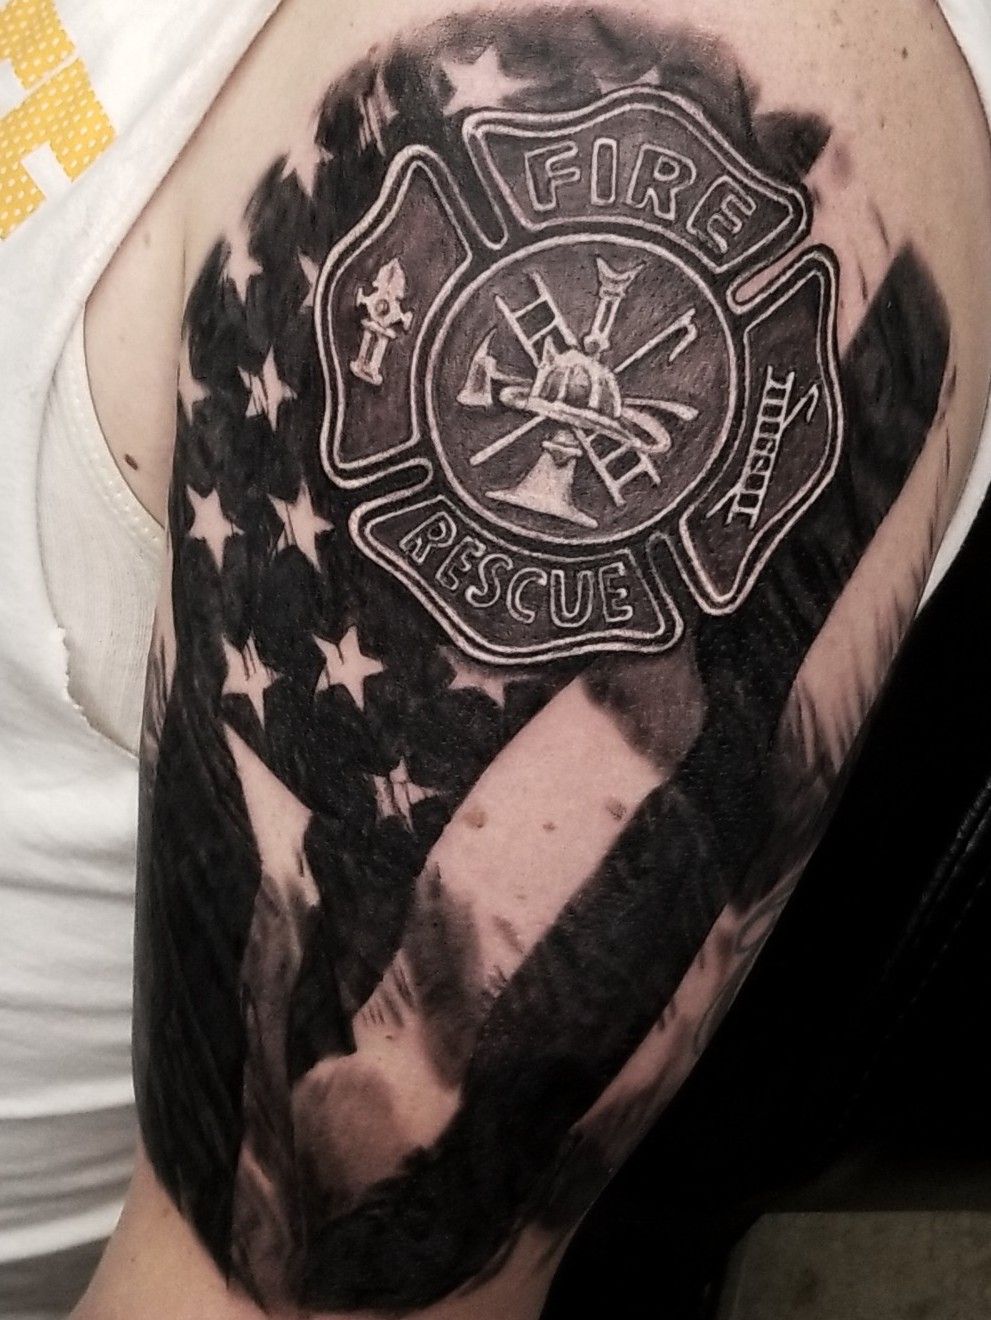 Top 30 Firefighter Tattoos  Incredible Firefighter Tattoo Designs  Ideas